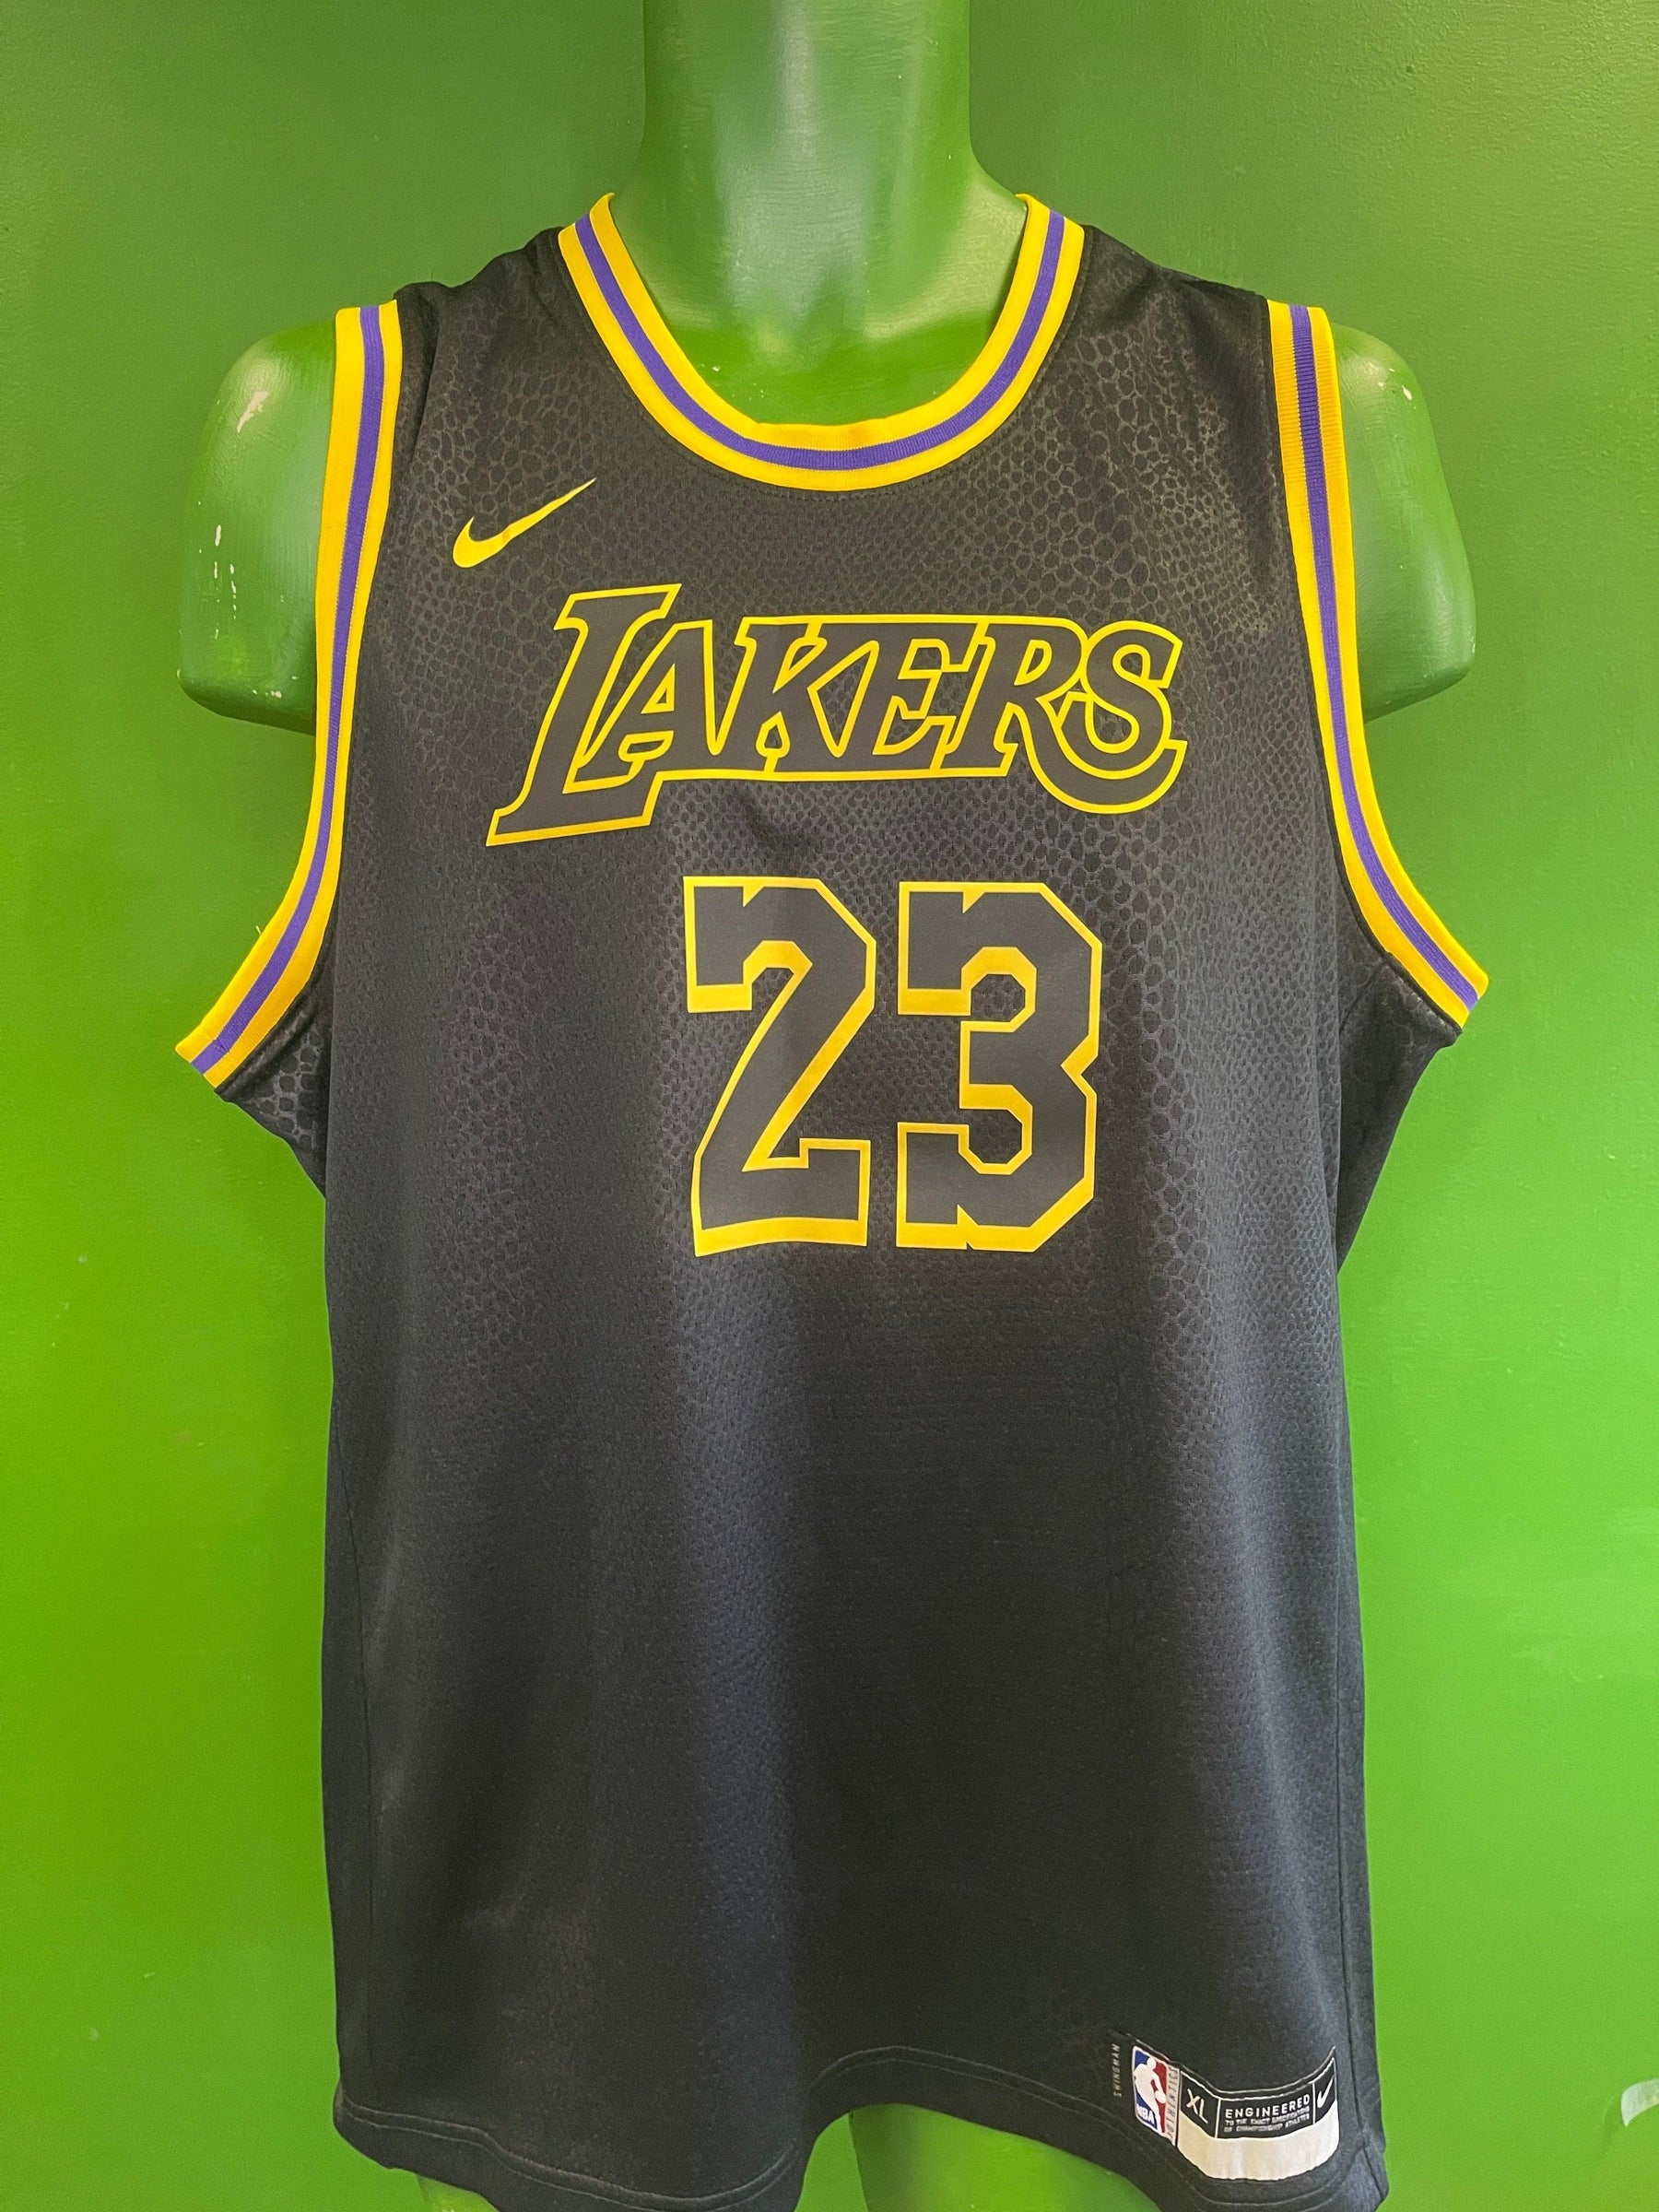 Nike Los Angeles Lakers NBA #6 Lebron James swingman youth jersey size  X-Large